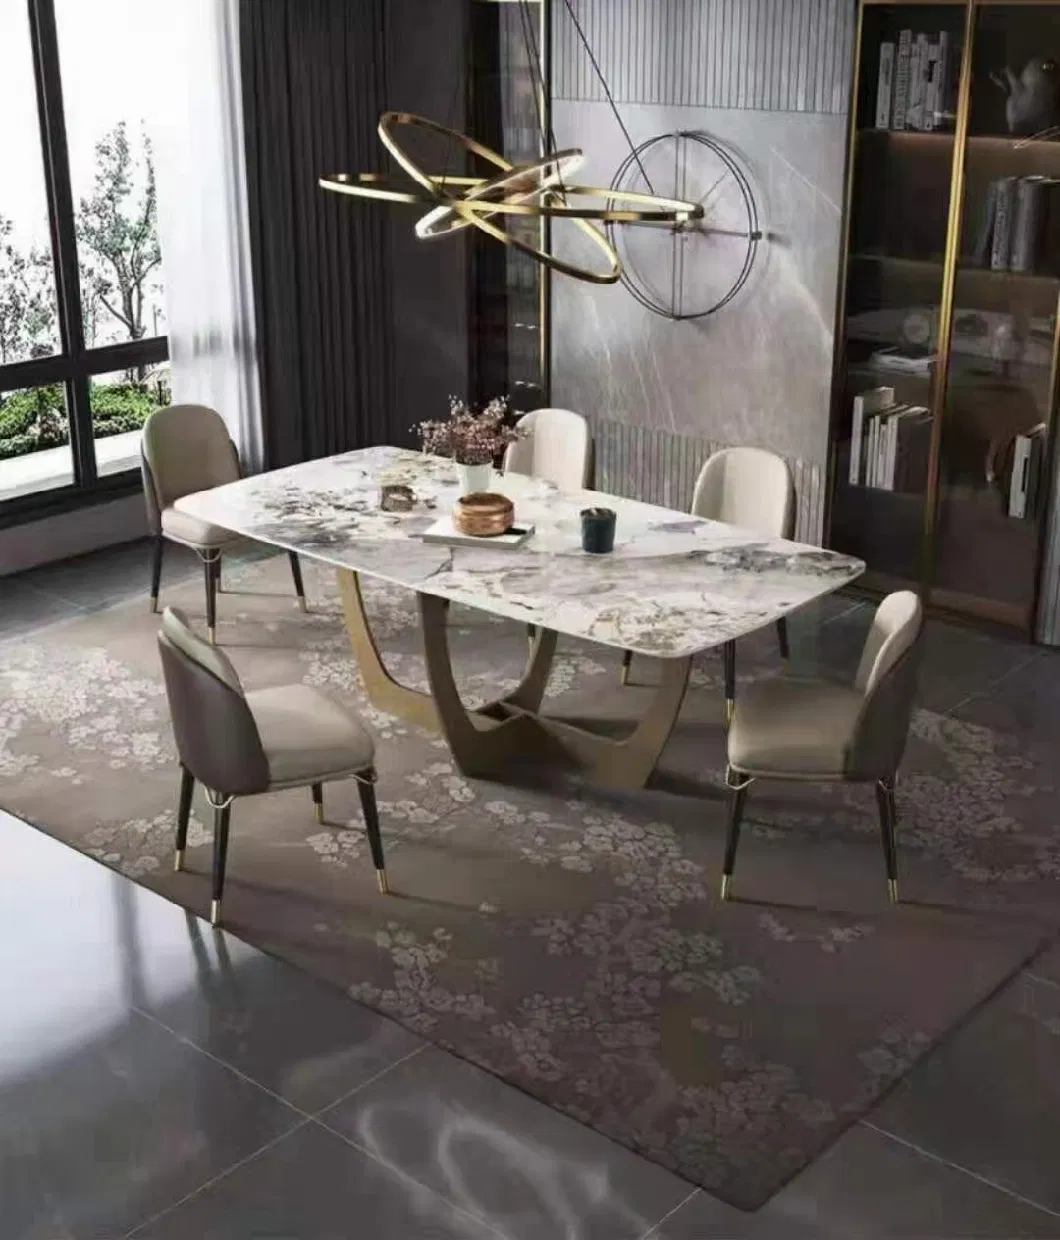 Sintered Stone Quartz Desk Table Top Living Room Furniture Customized